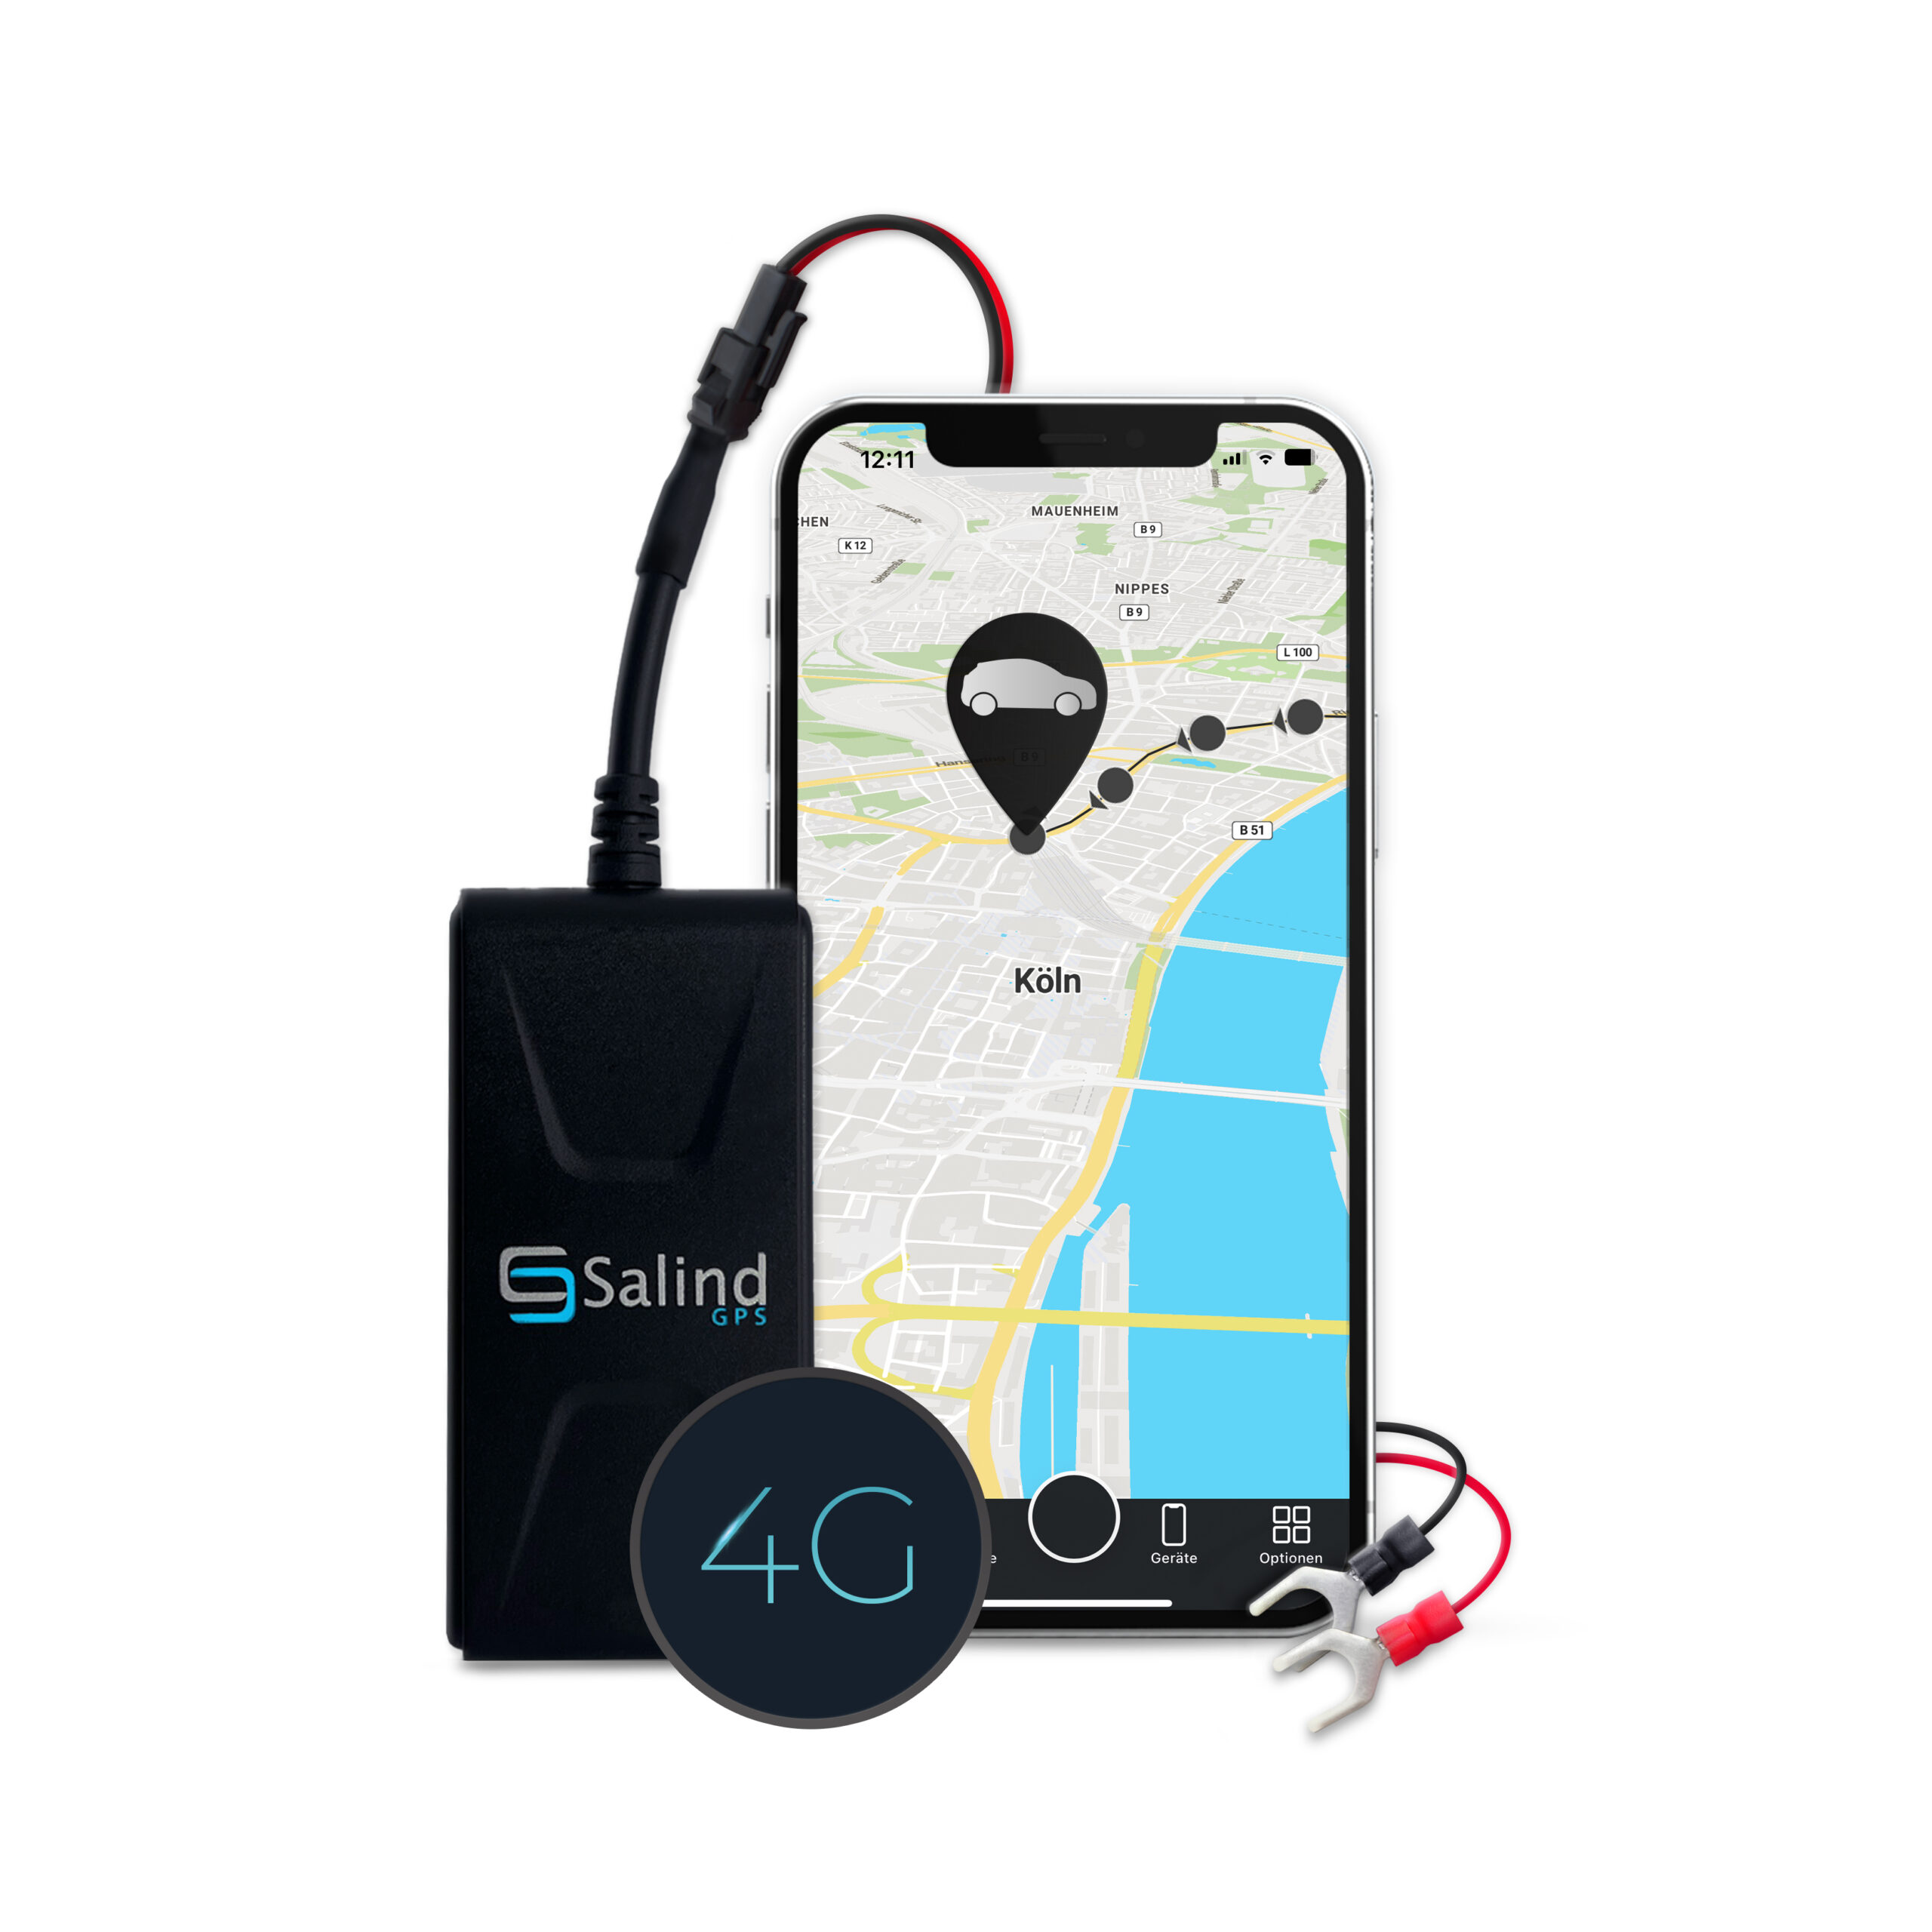 Salind GPS Tracker 01 4G